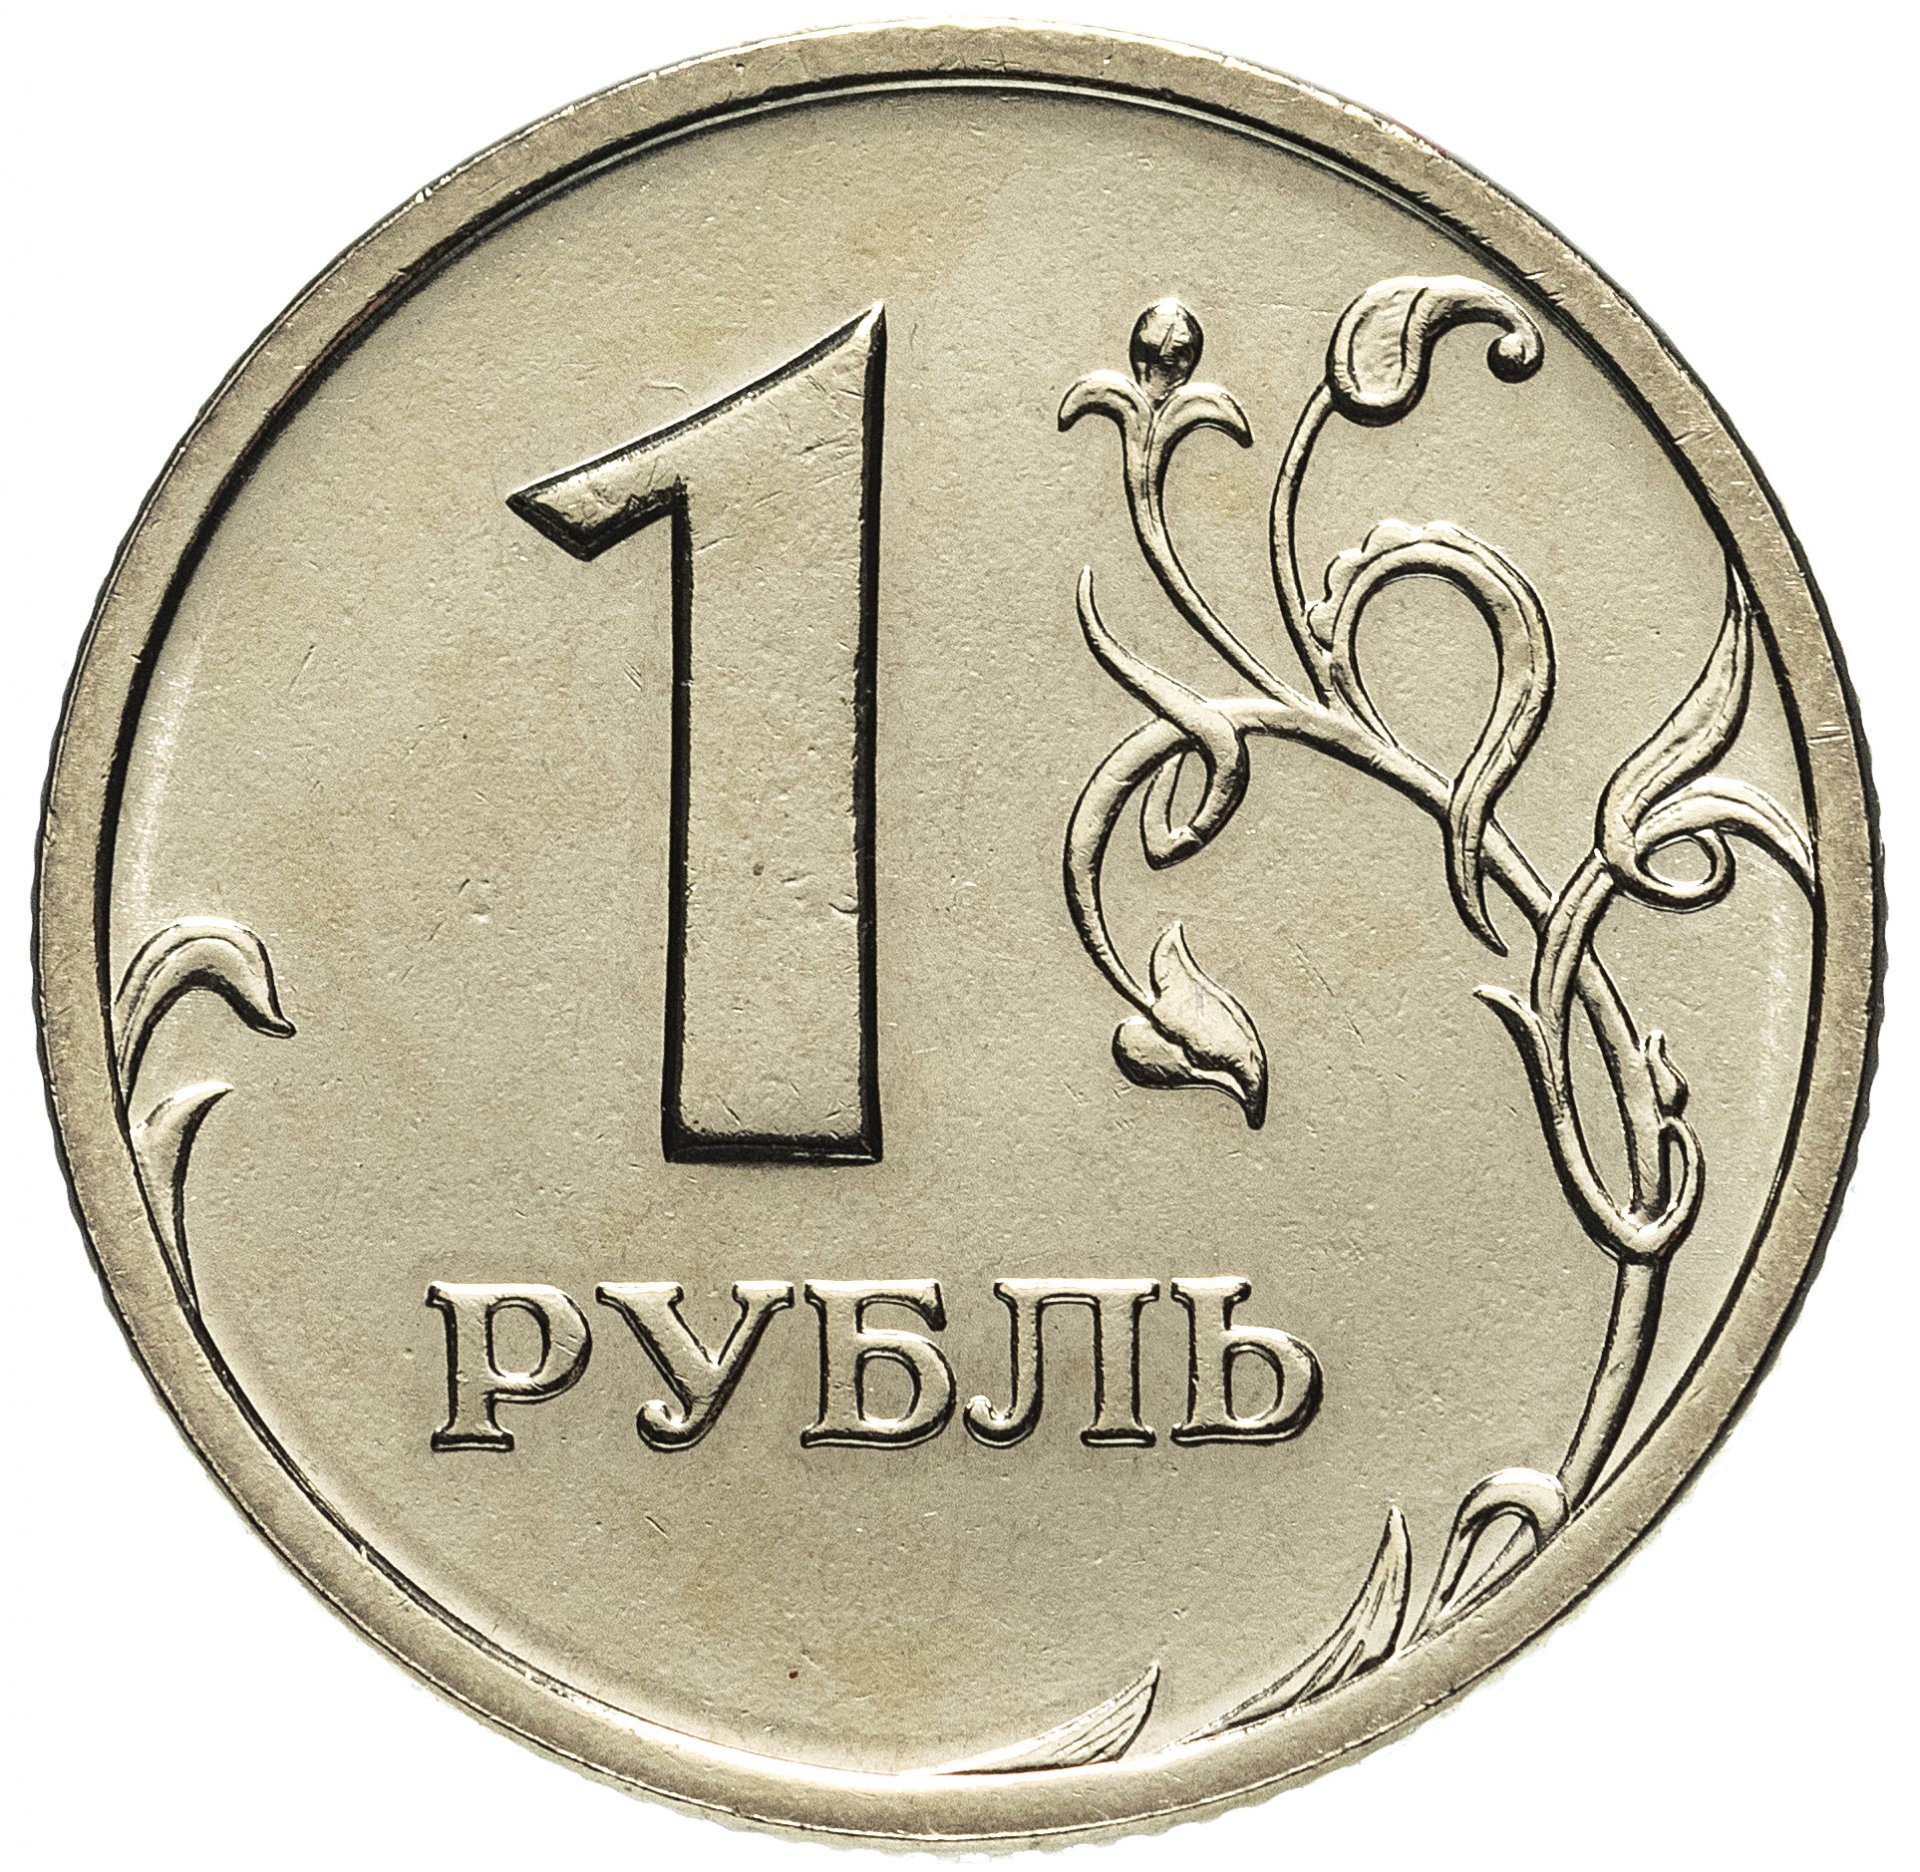 1 тин в рублях. 1 Рубль 1999 ММД широкий кант. Монета 1 рубль. Монеты 1 рубль для детей. Изображение монеты 1 рубль.